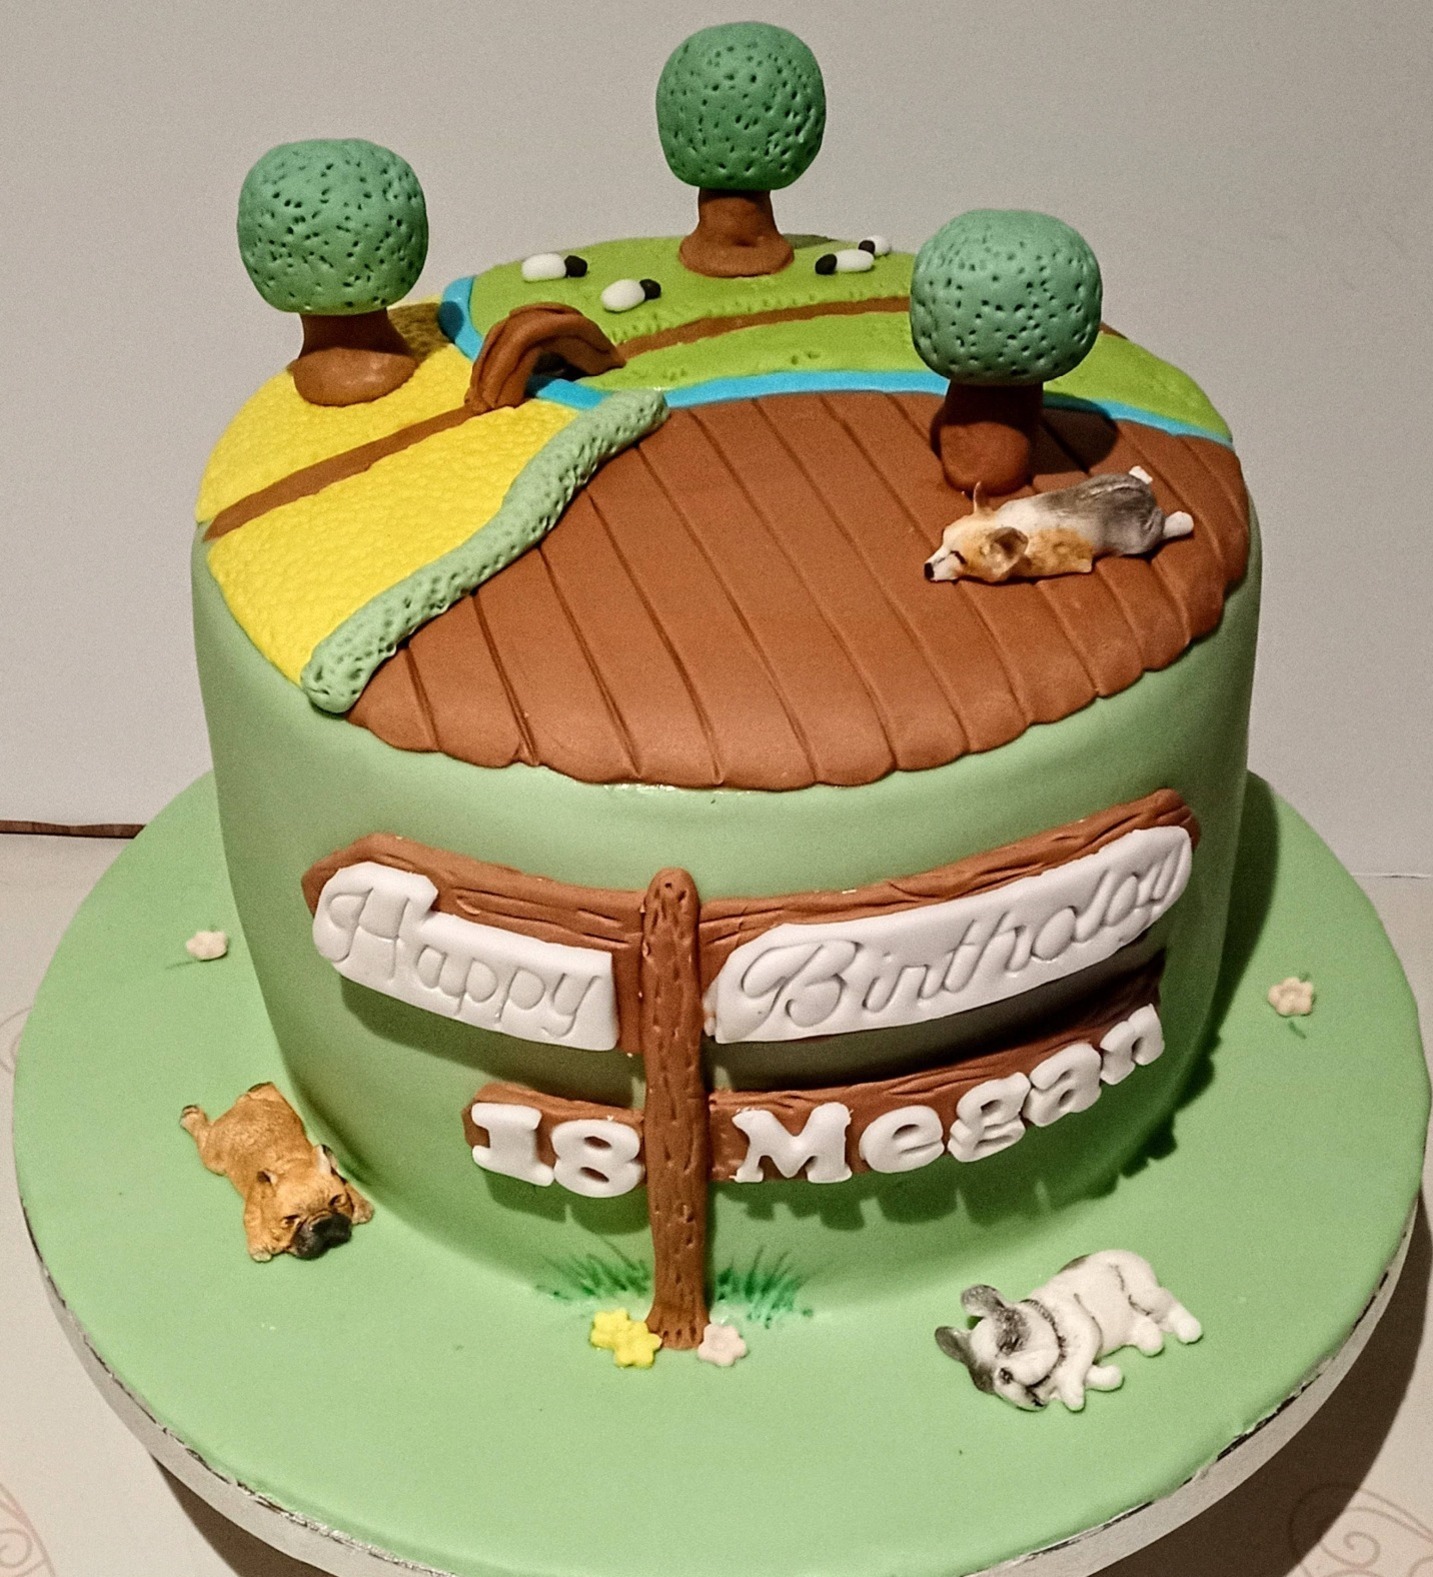 "Countryside" inspired 18th birthday cake